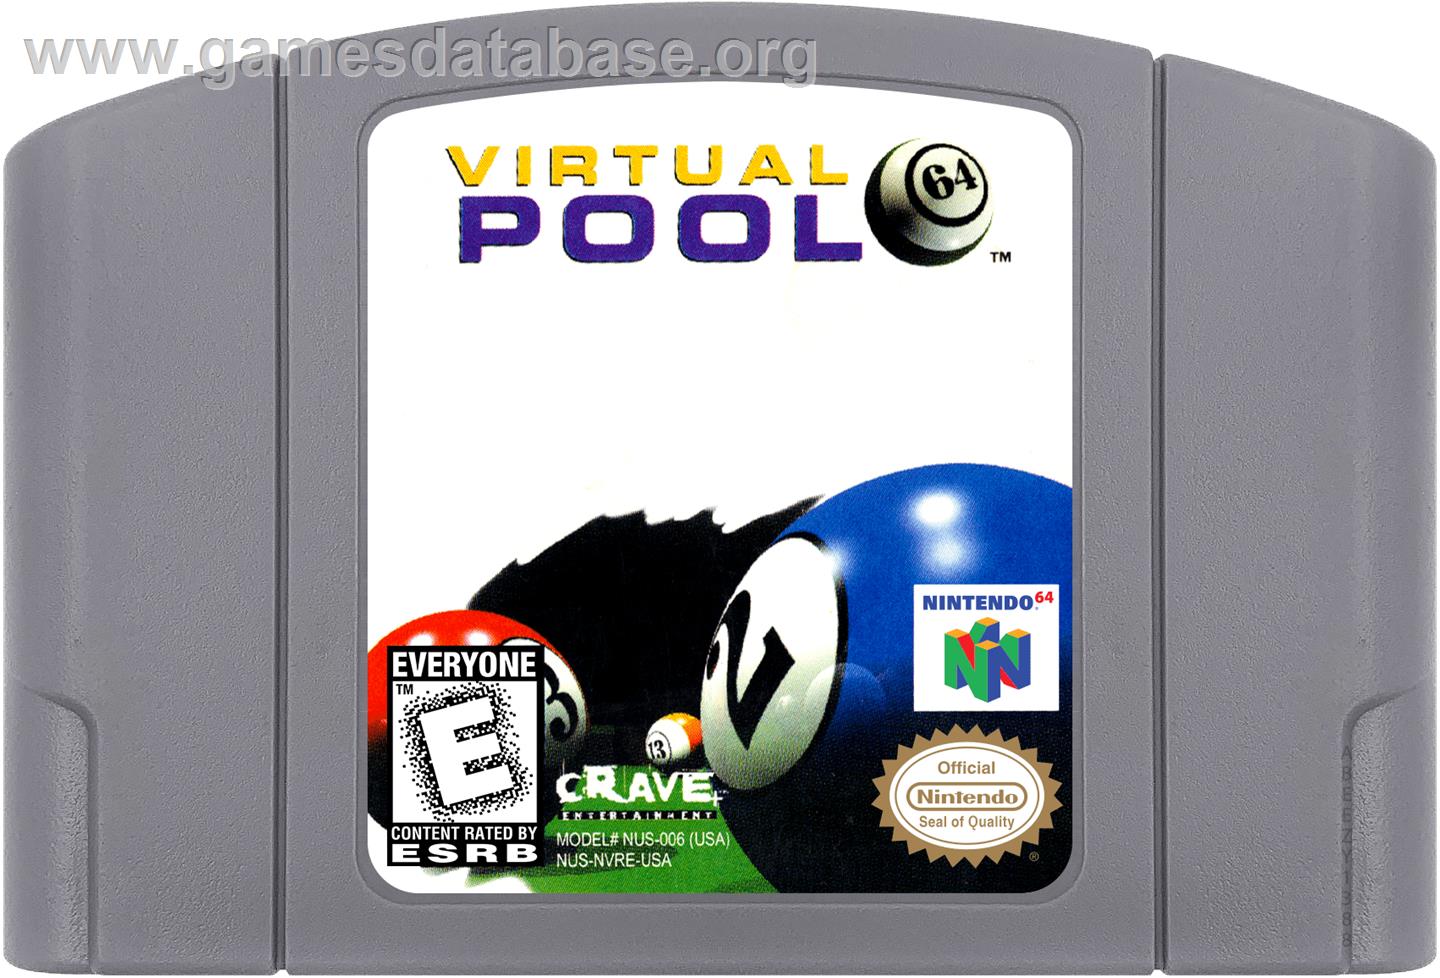 Virtual Pool 64 - Nintendo N64 - Artwork - Cartridge